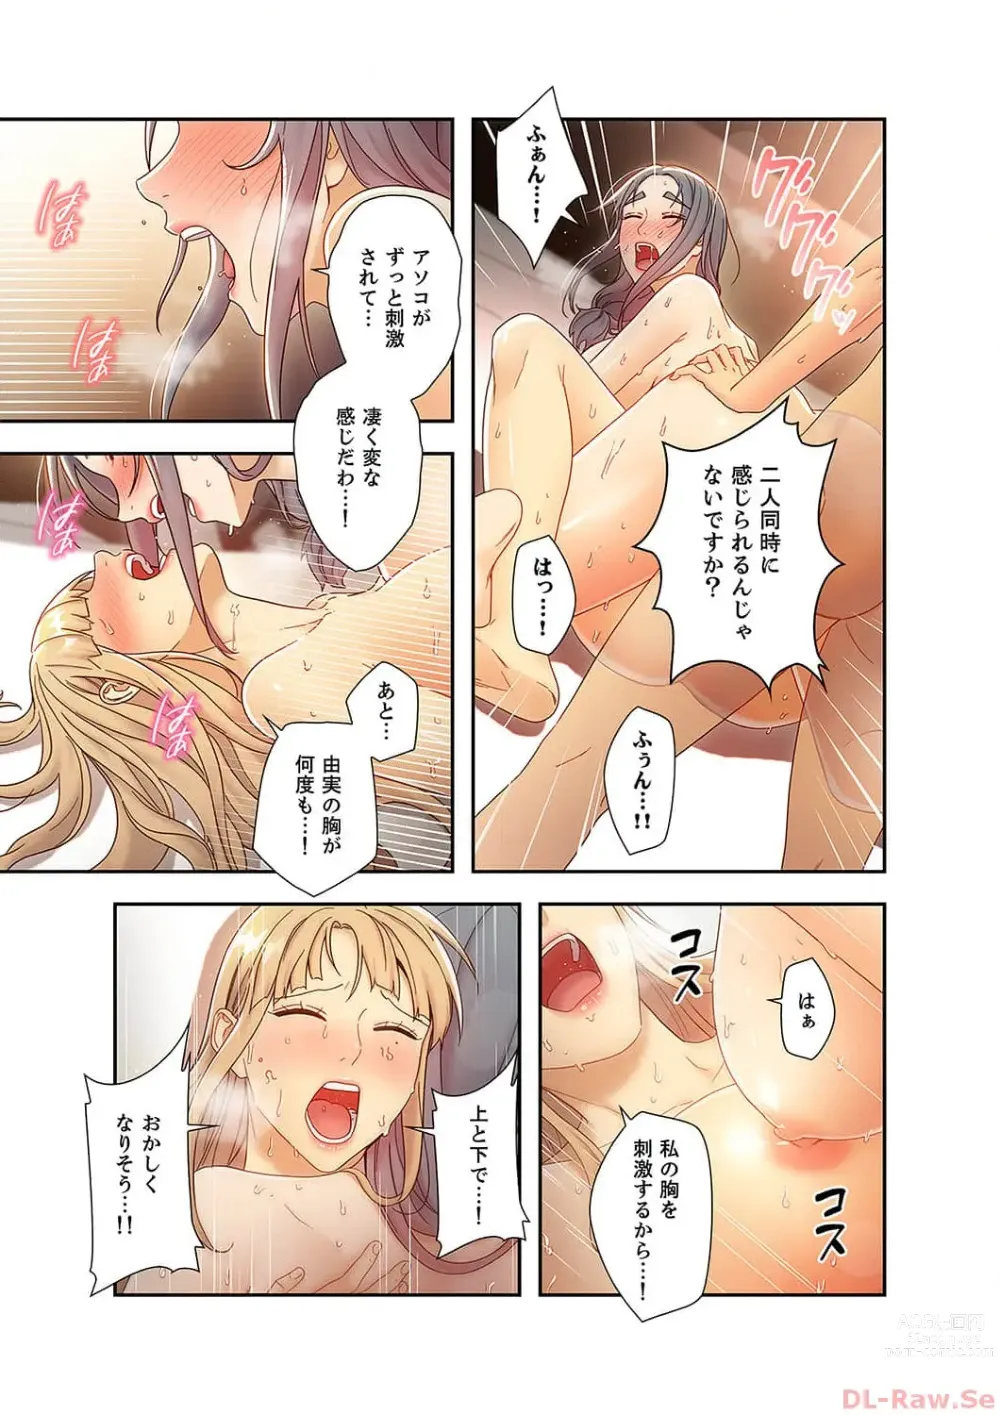 Page 9 of manga Harem x Harem 5